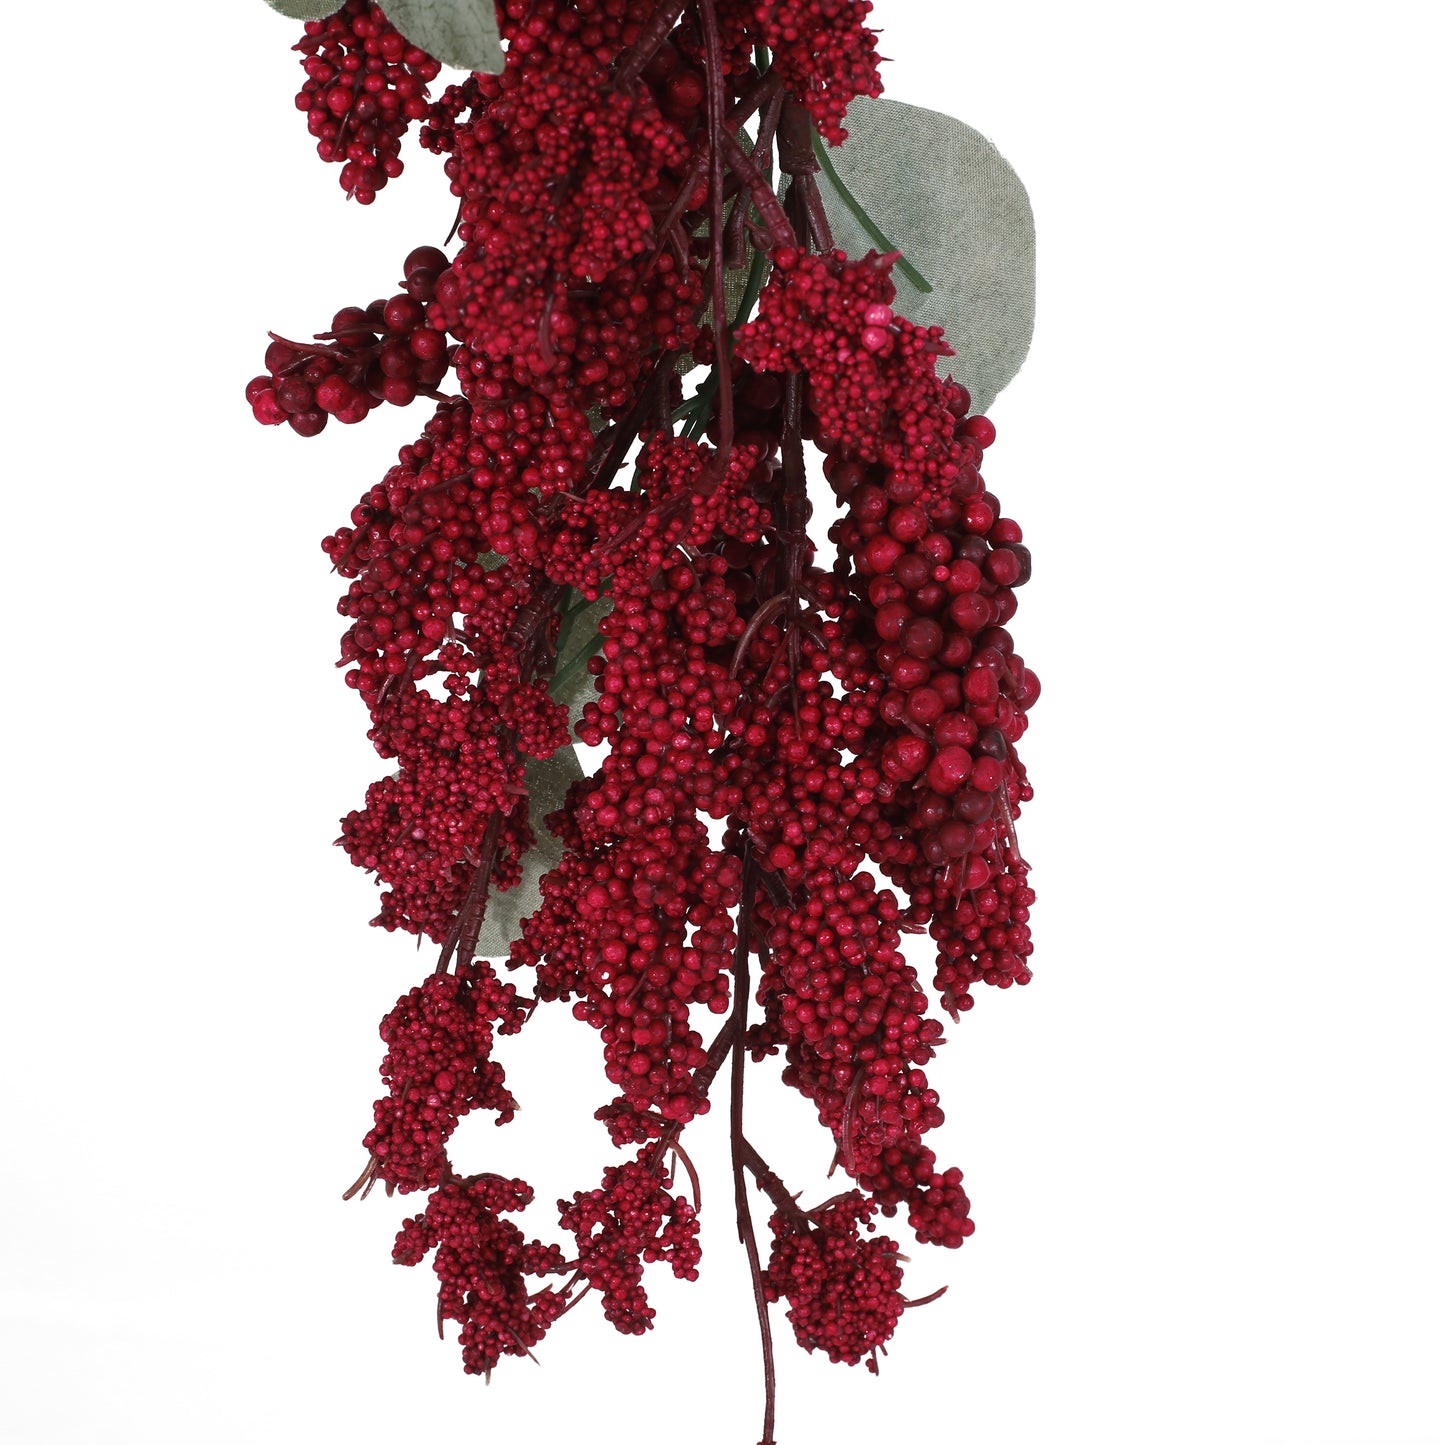 Sedlari 5-foot Eucalyptus Artificial Garland with Berries, Green and Red